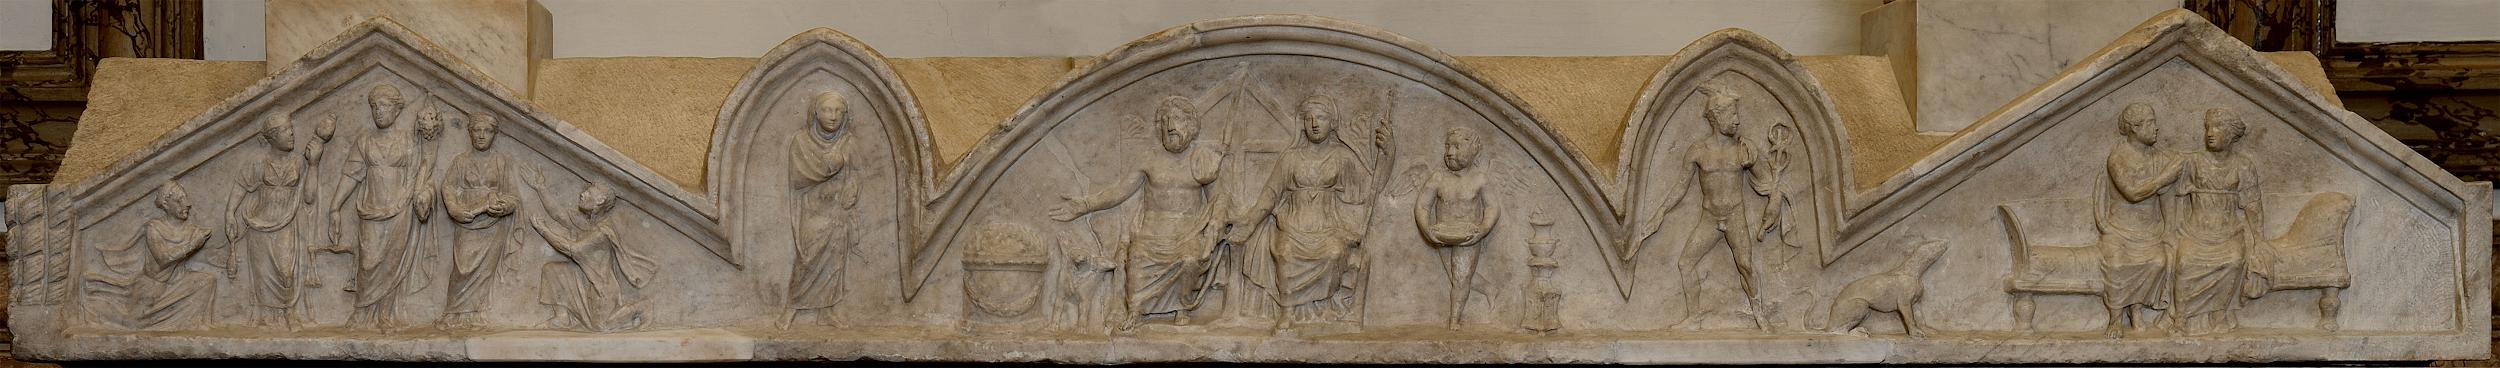 Скульптура Мойр, Саркофаг с мифом о Селене и Эндимионе